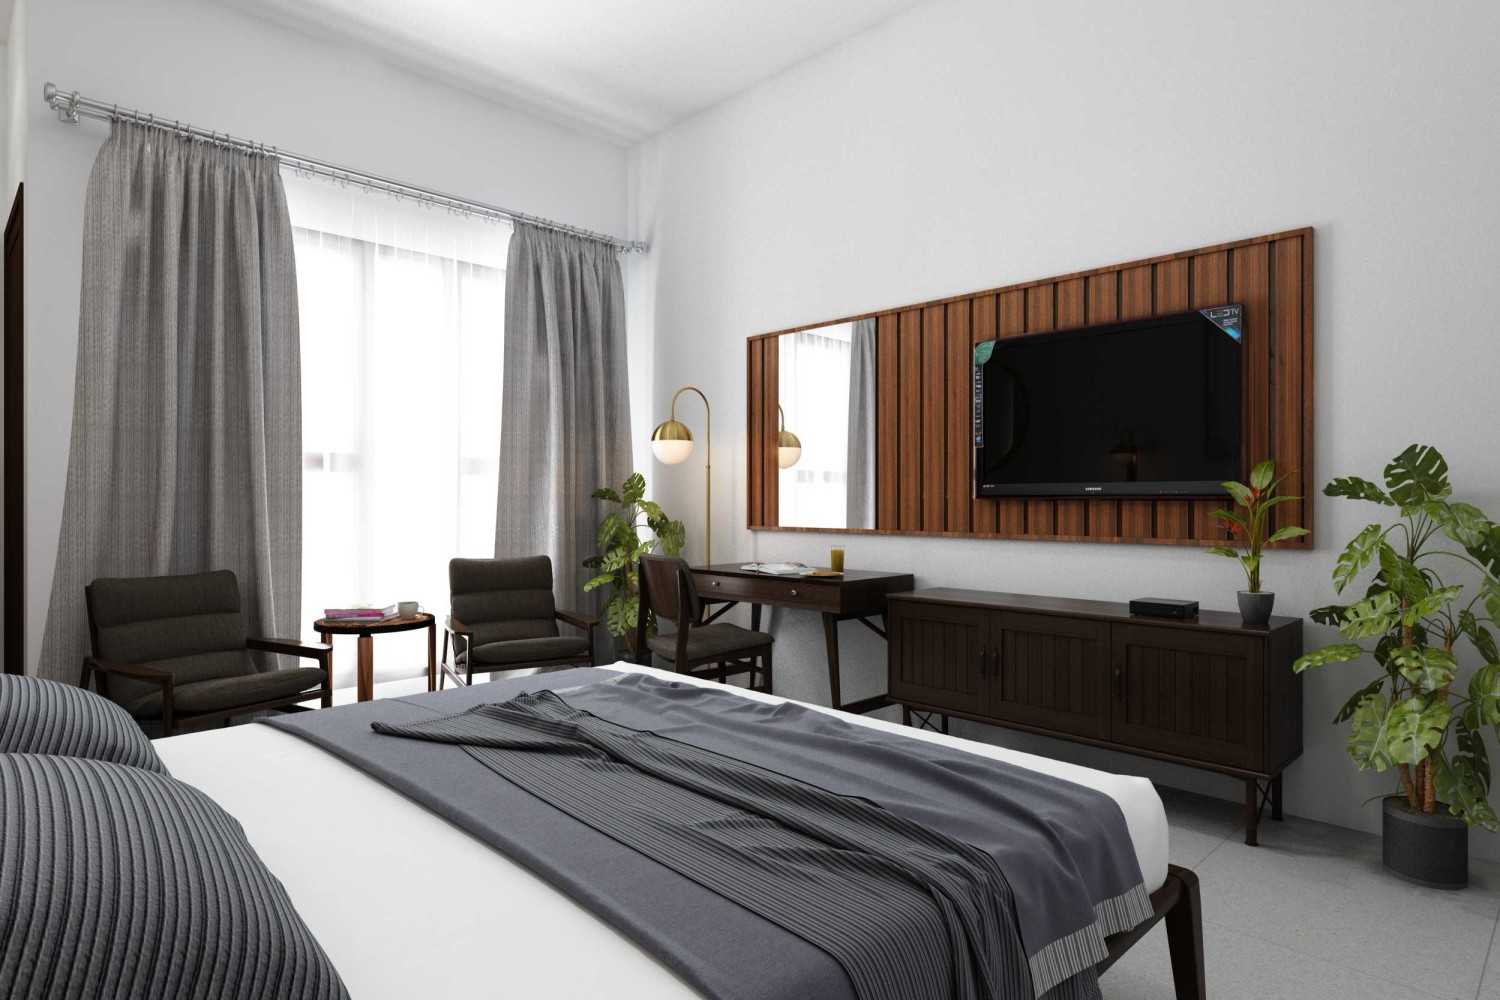 36 Ide Cantik Desain Kamar Minimalis Seperti Hotel Trend Masa Kini